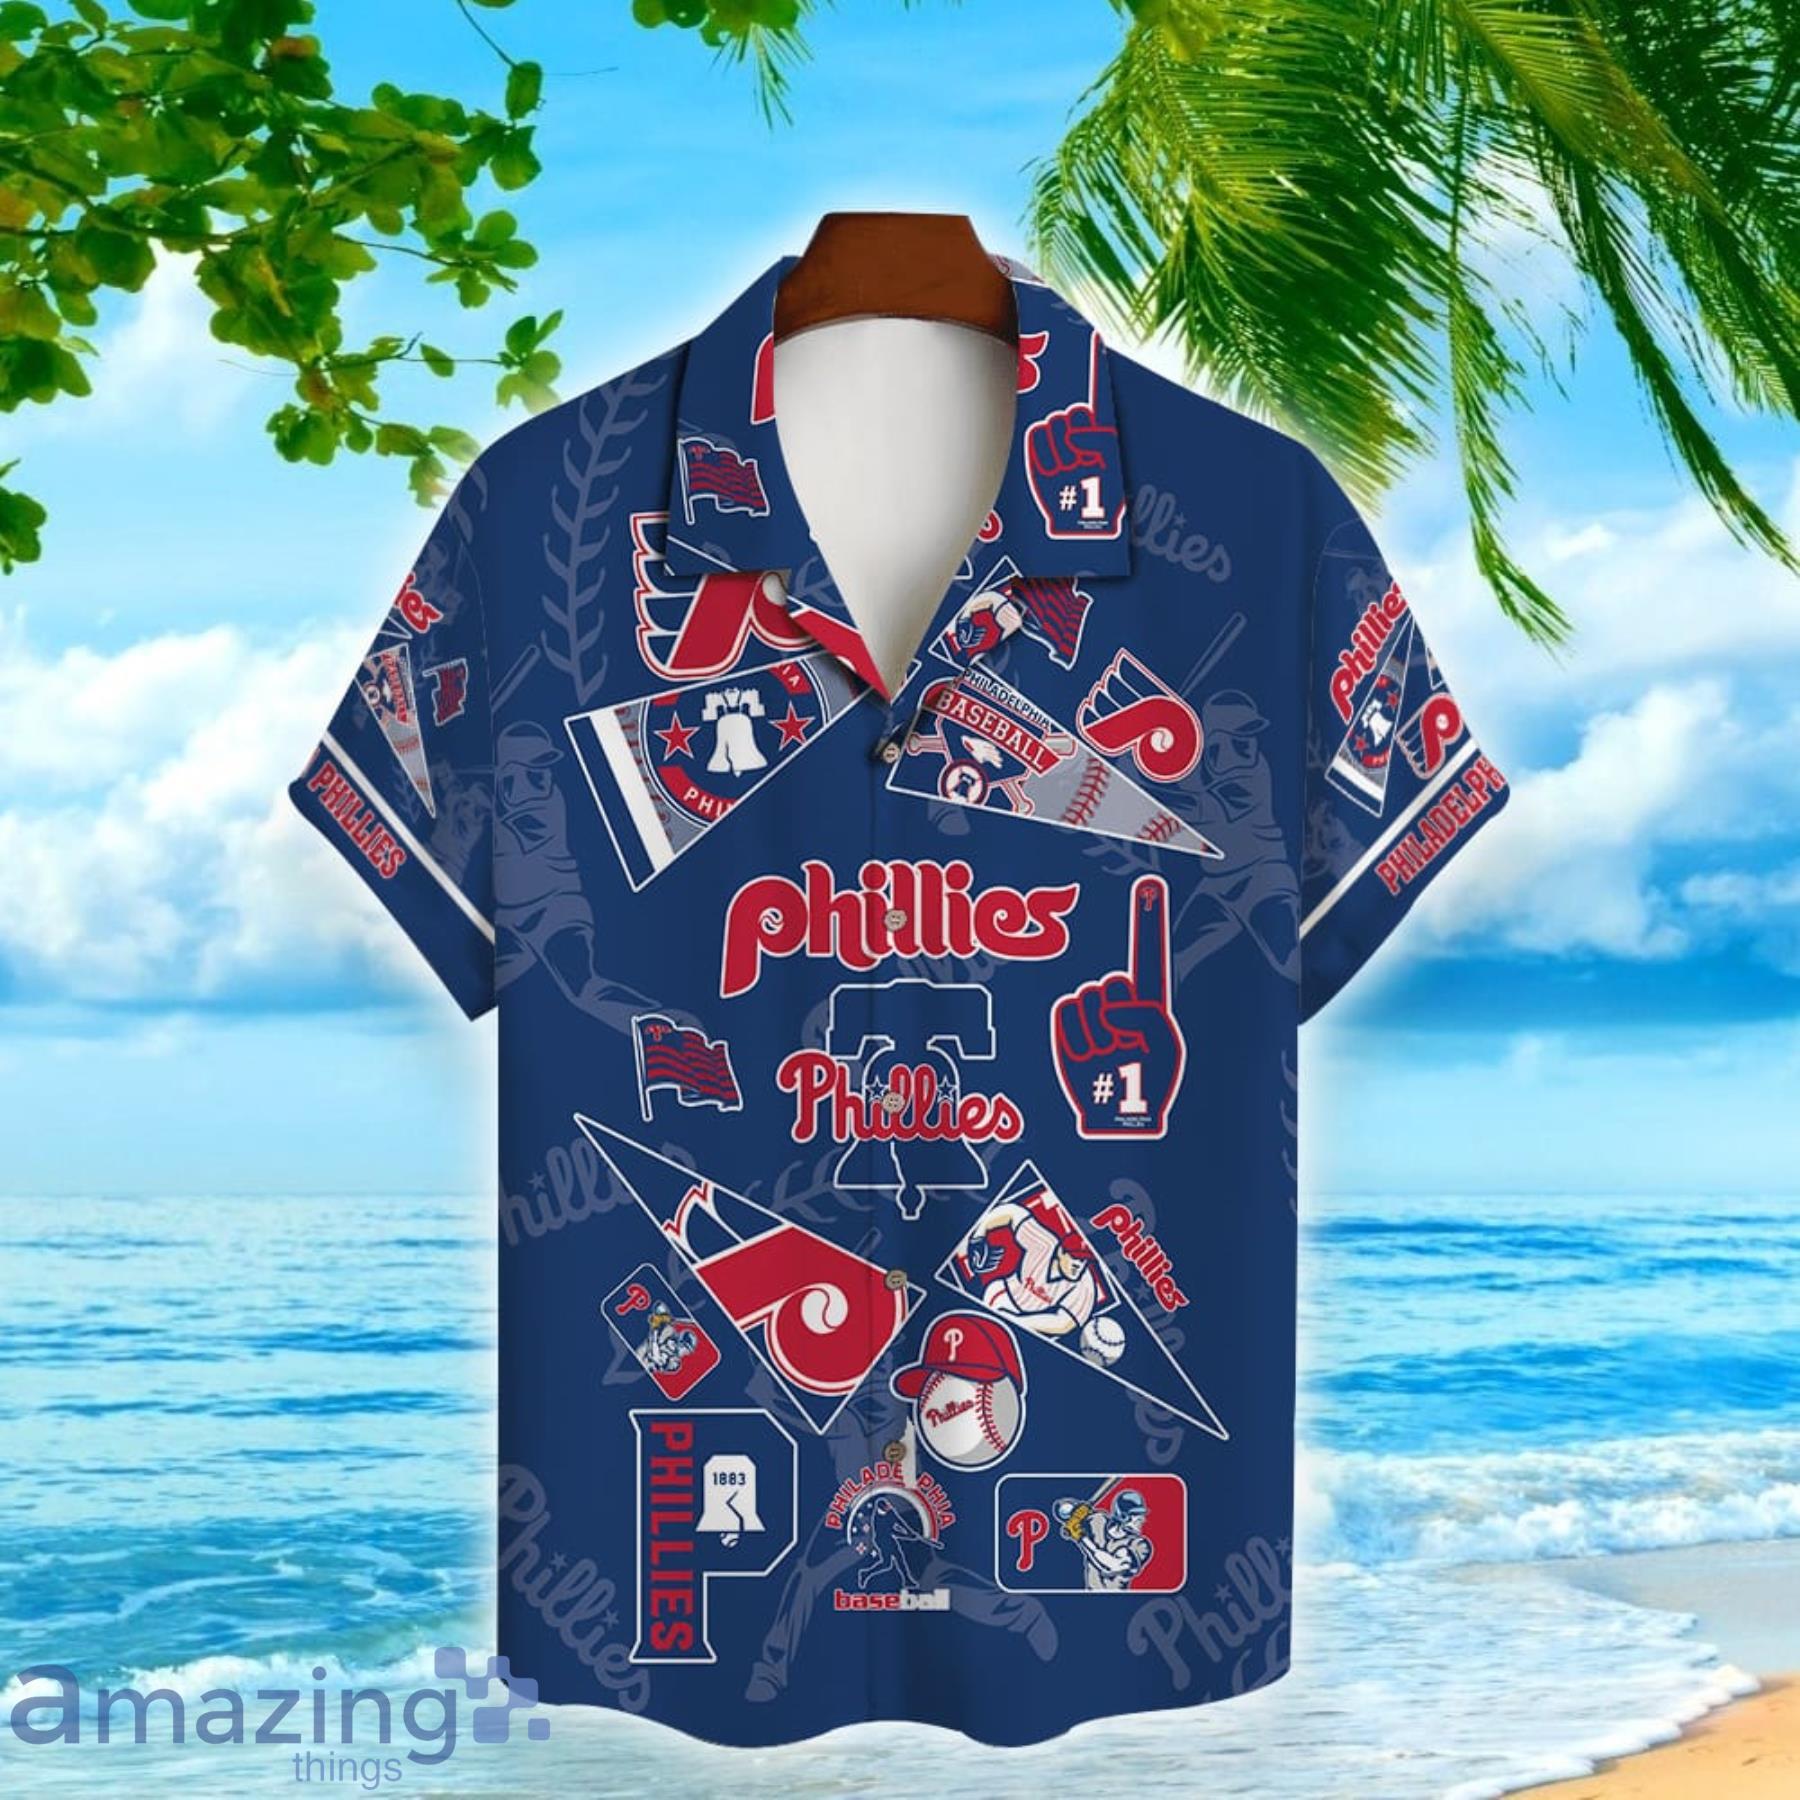 phillies blue hawaiian shirt